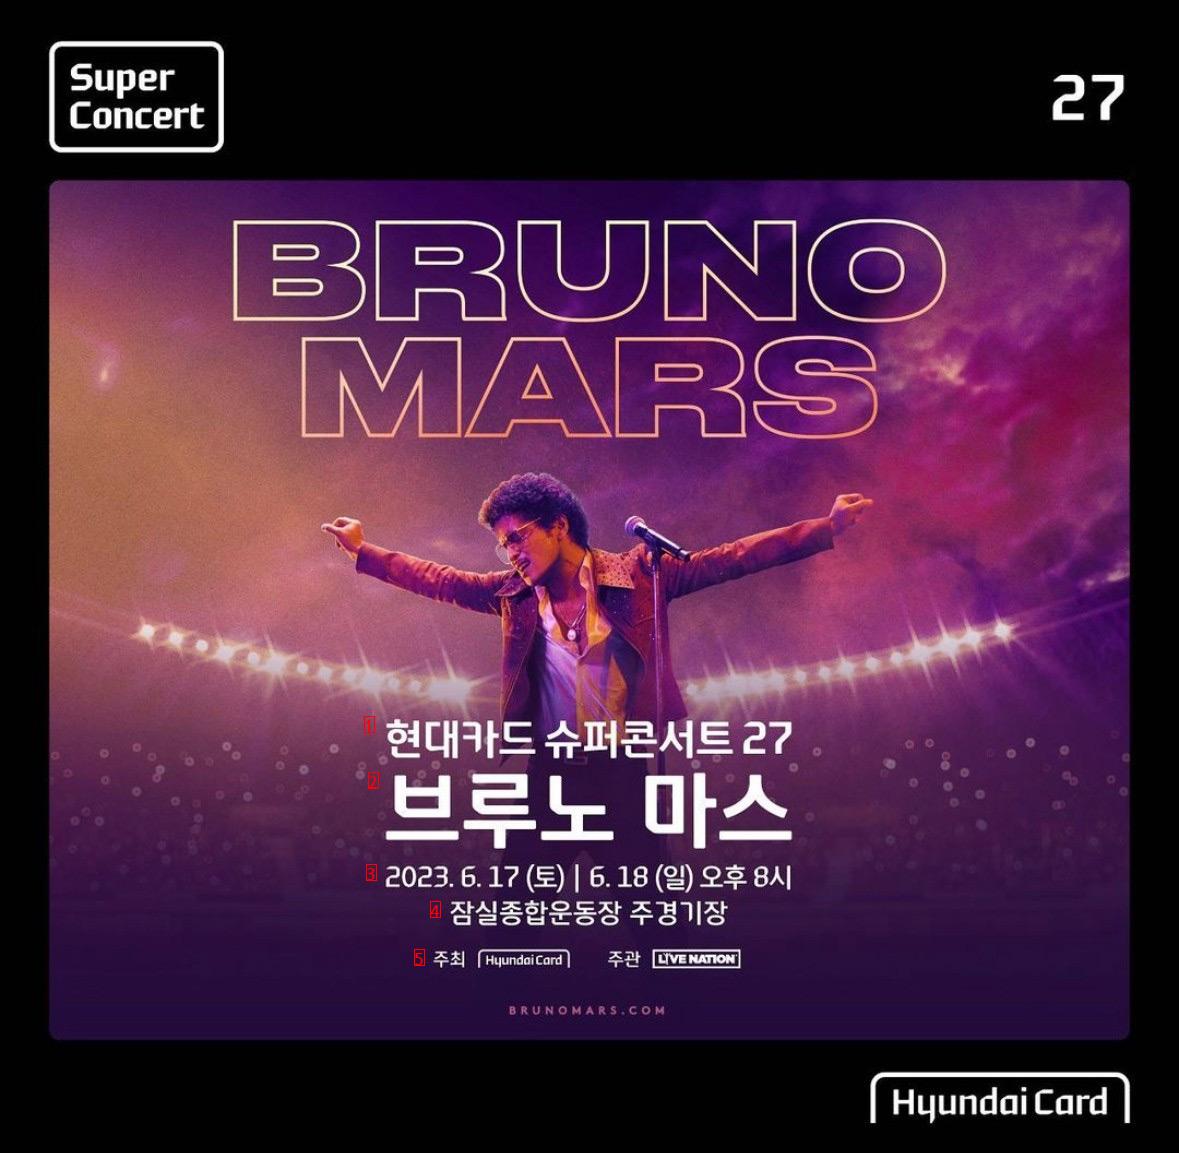 Hyundai Card Super Concert 27. Bruno Mars